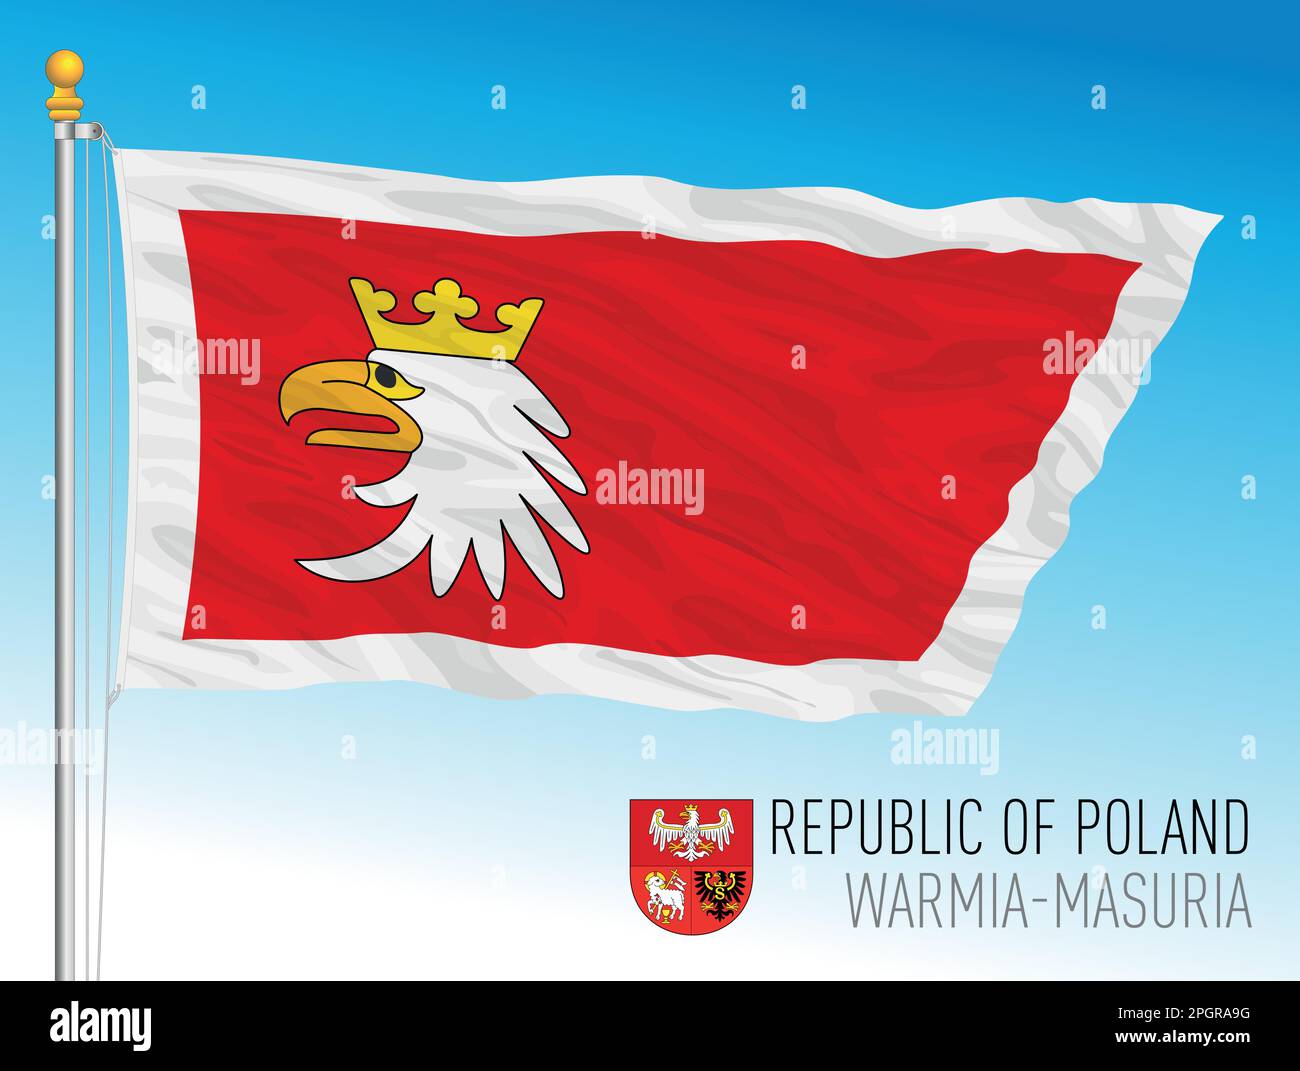 Warmia Masurian regional flag and coat of arms, Republic of Poland, european country, vector illustration Stock Vector